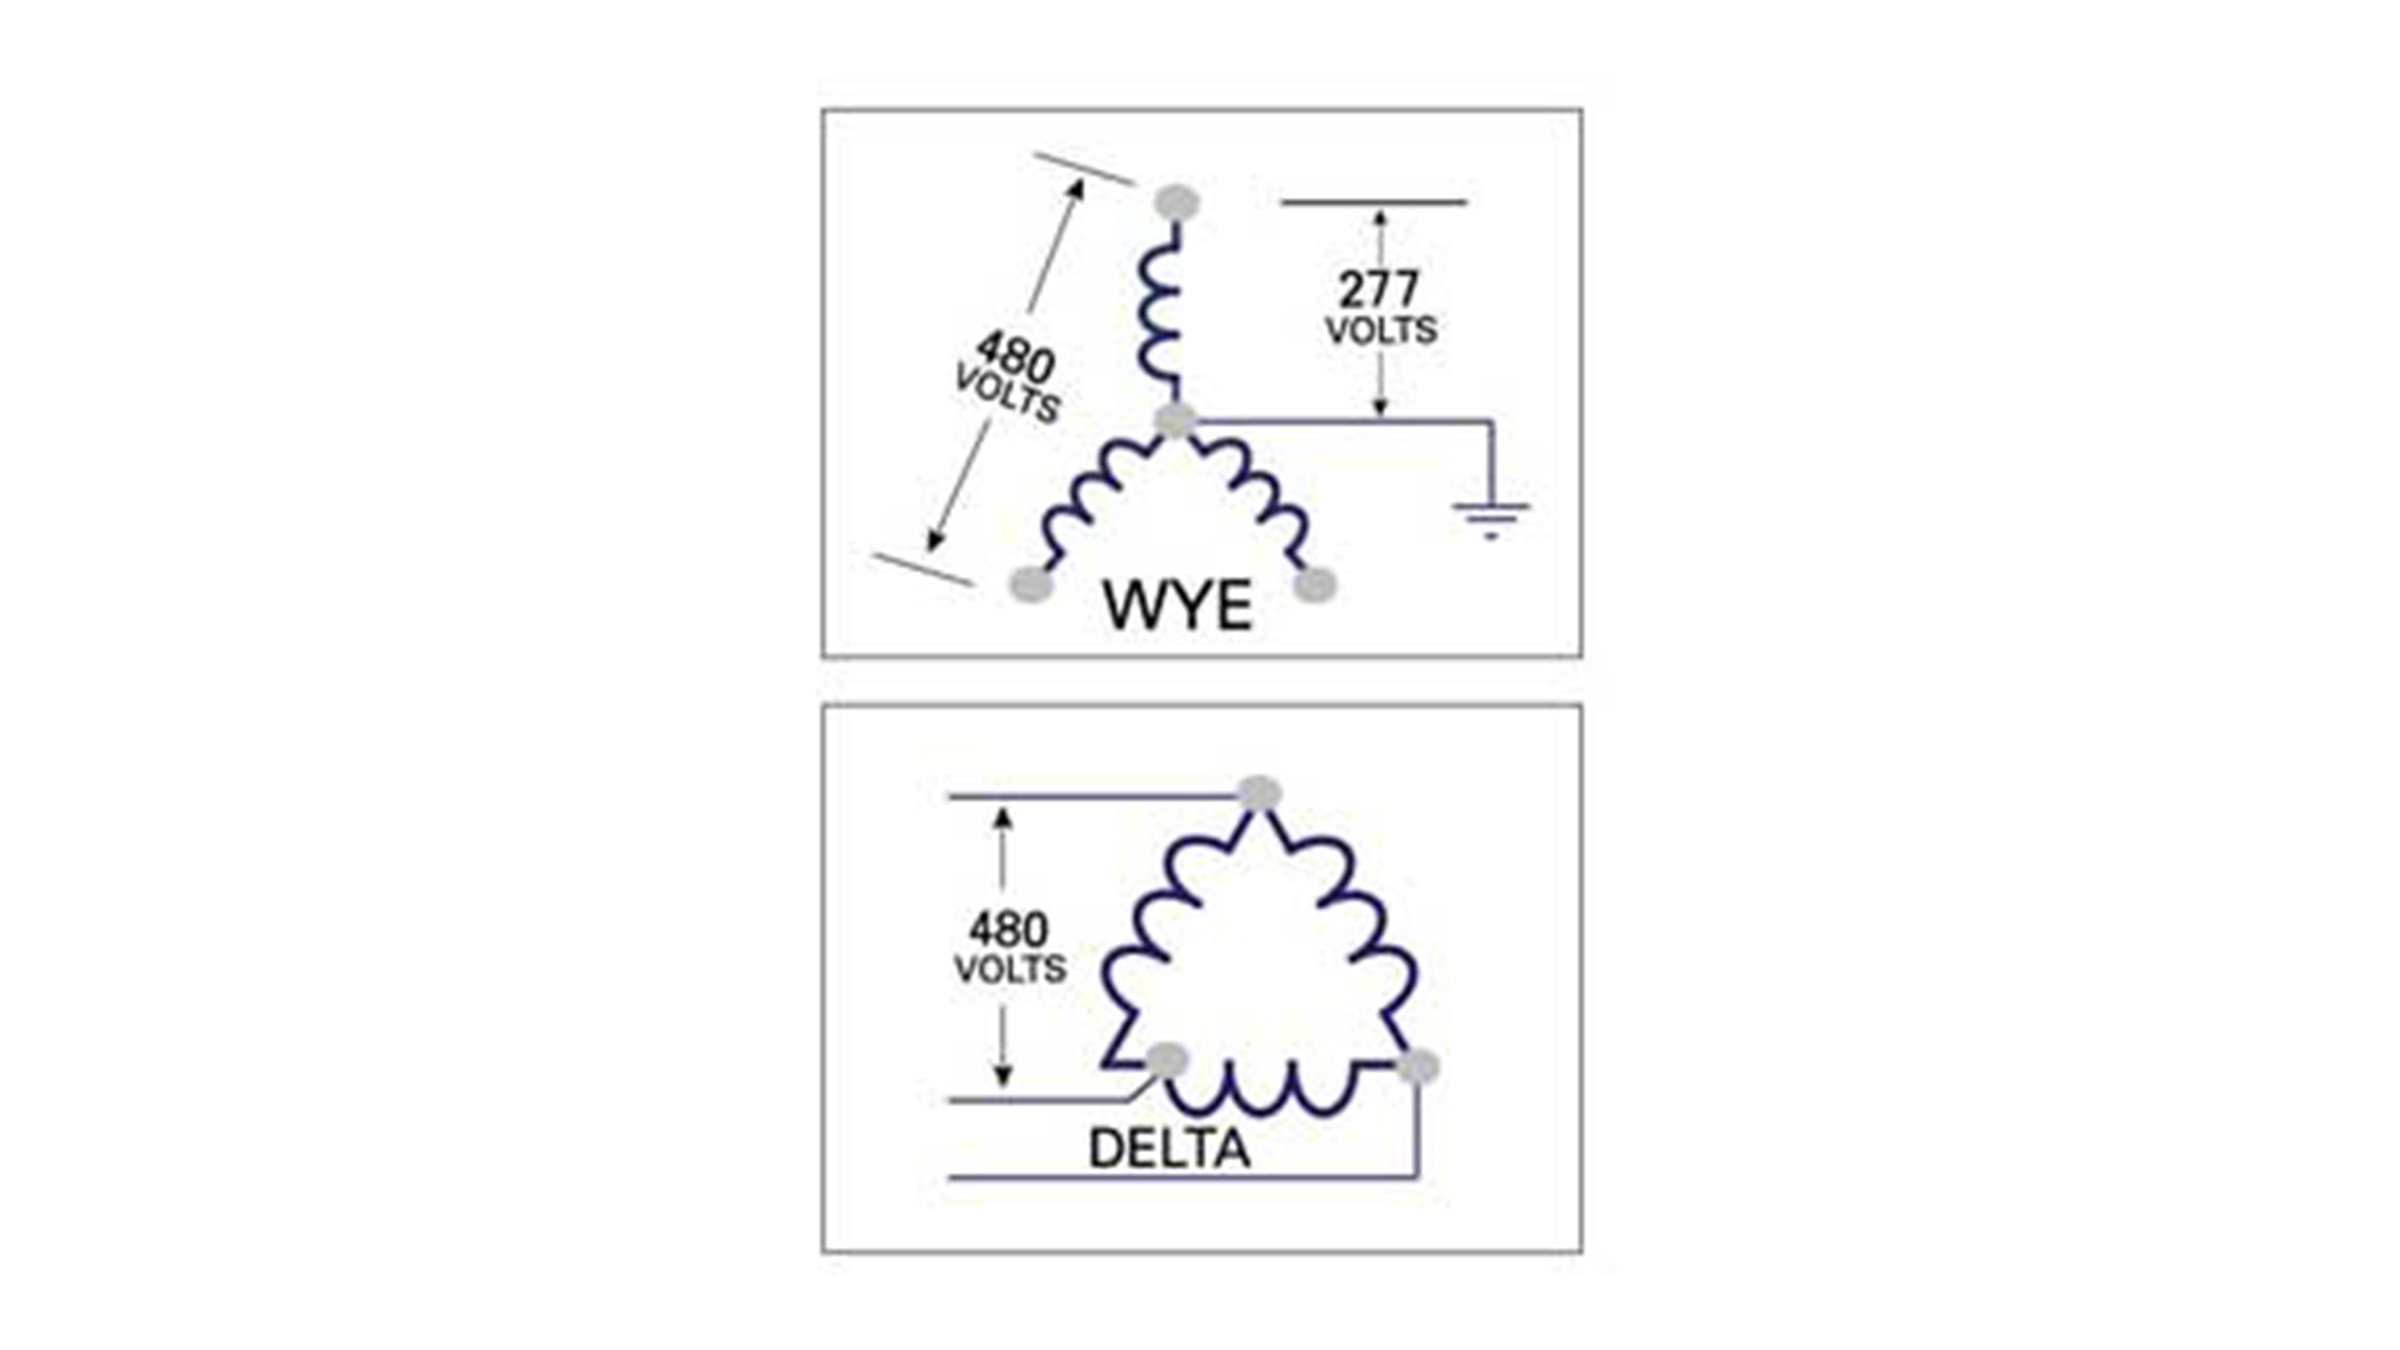 Sprecher & Schuh diagram showing wye connection vs. delta connection power